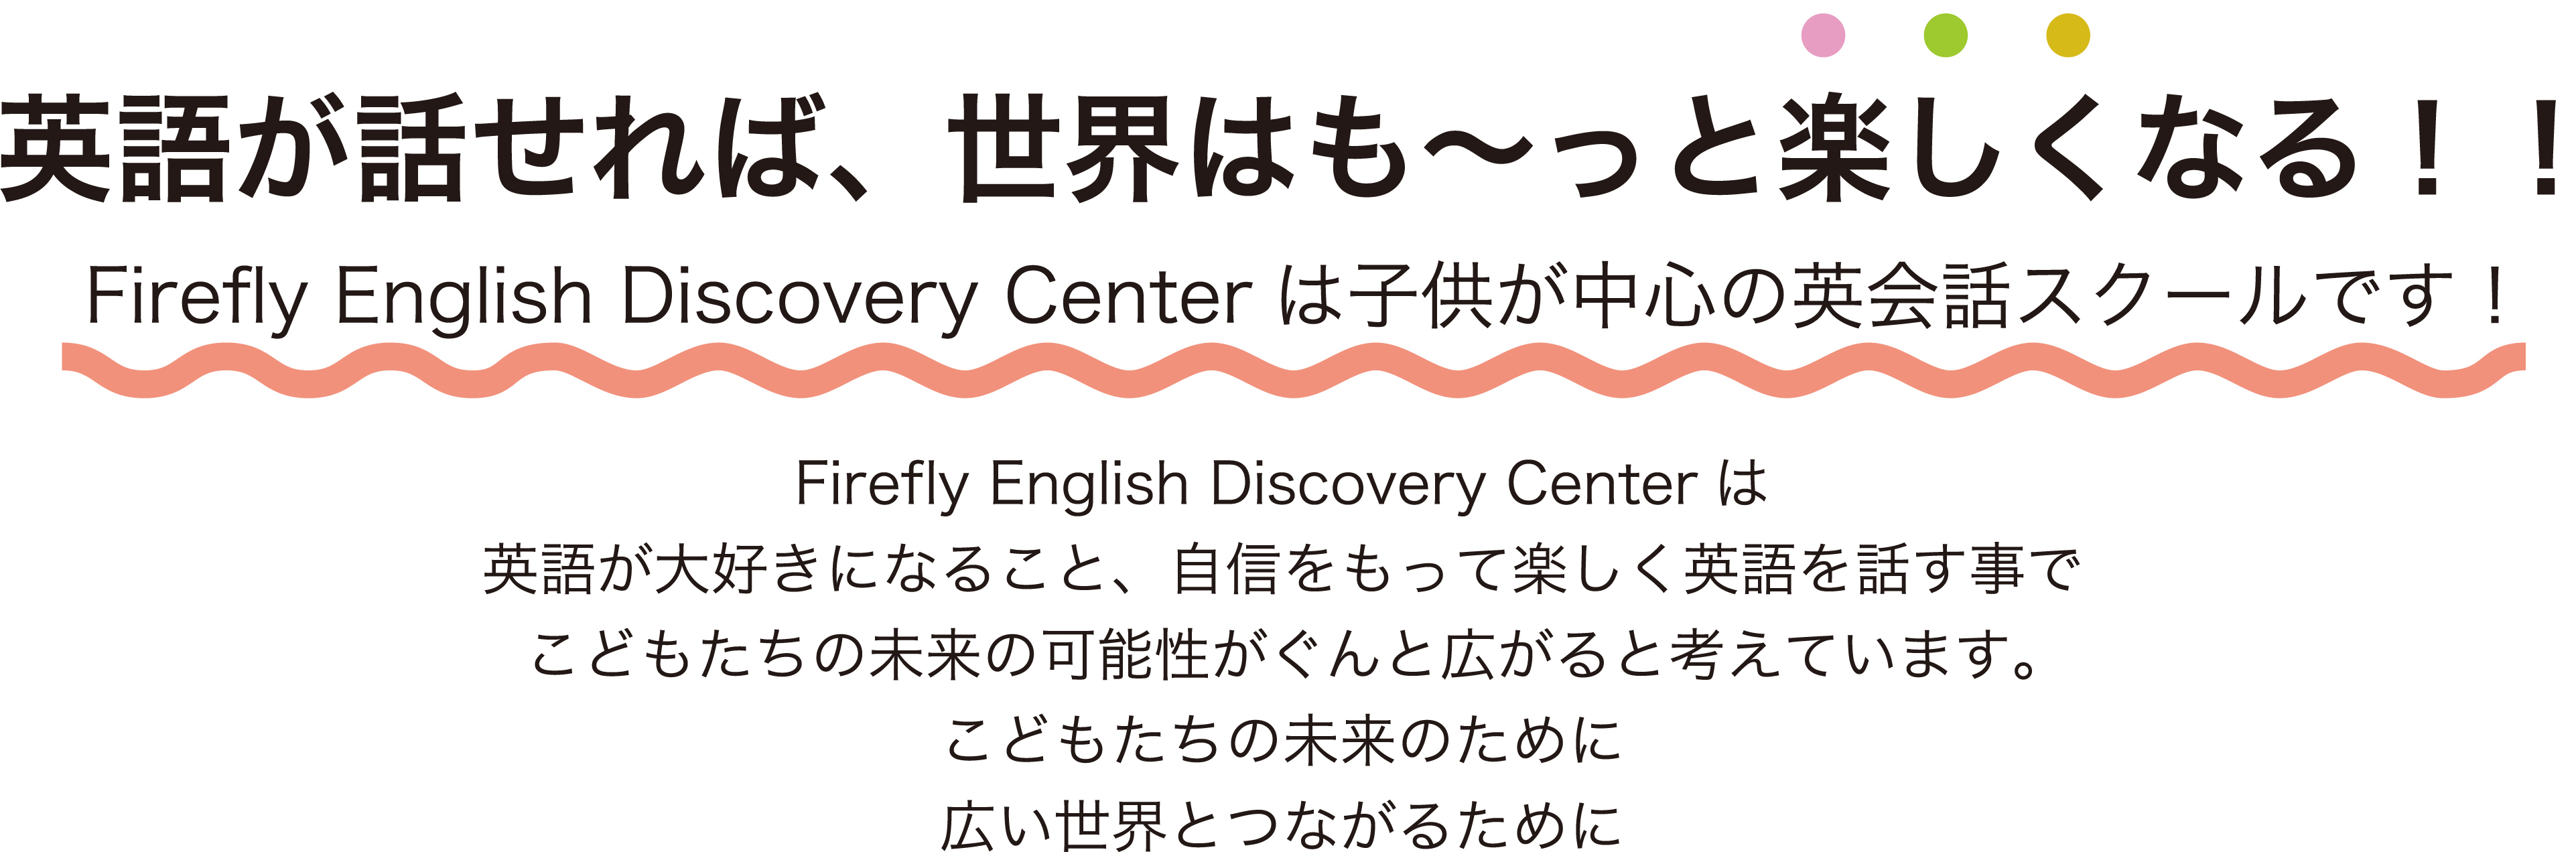 Firefly English Discovery Centerについて